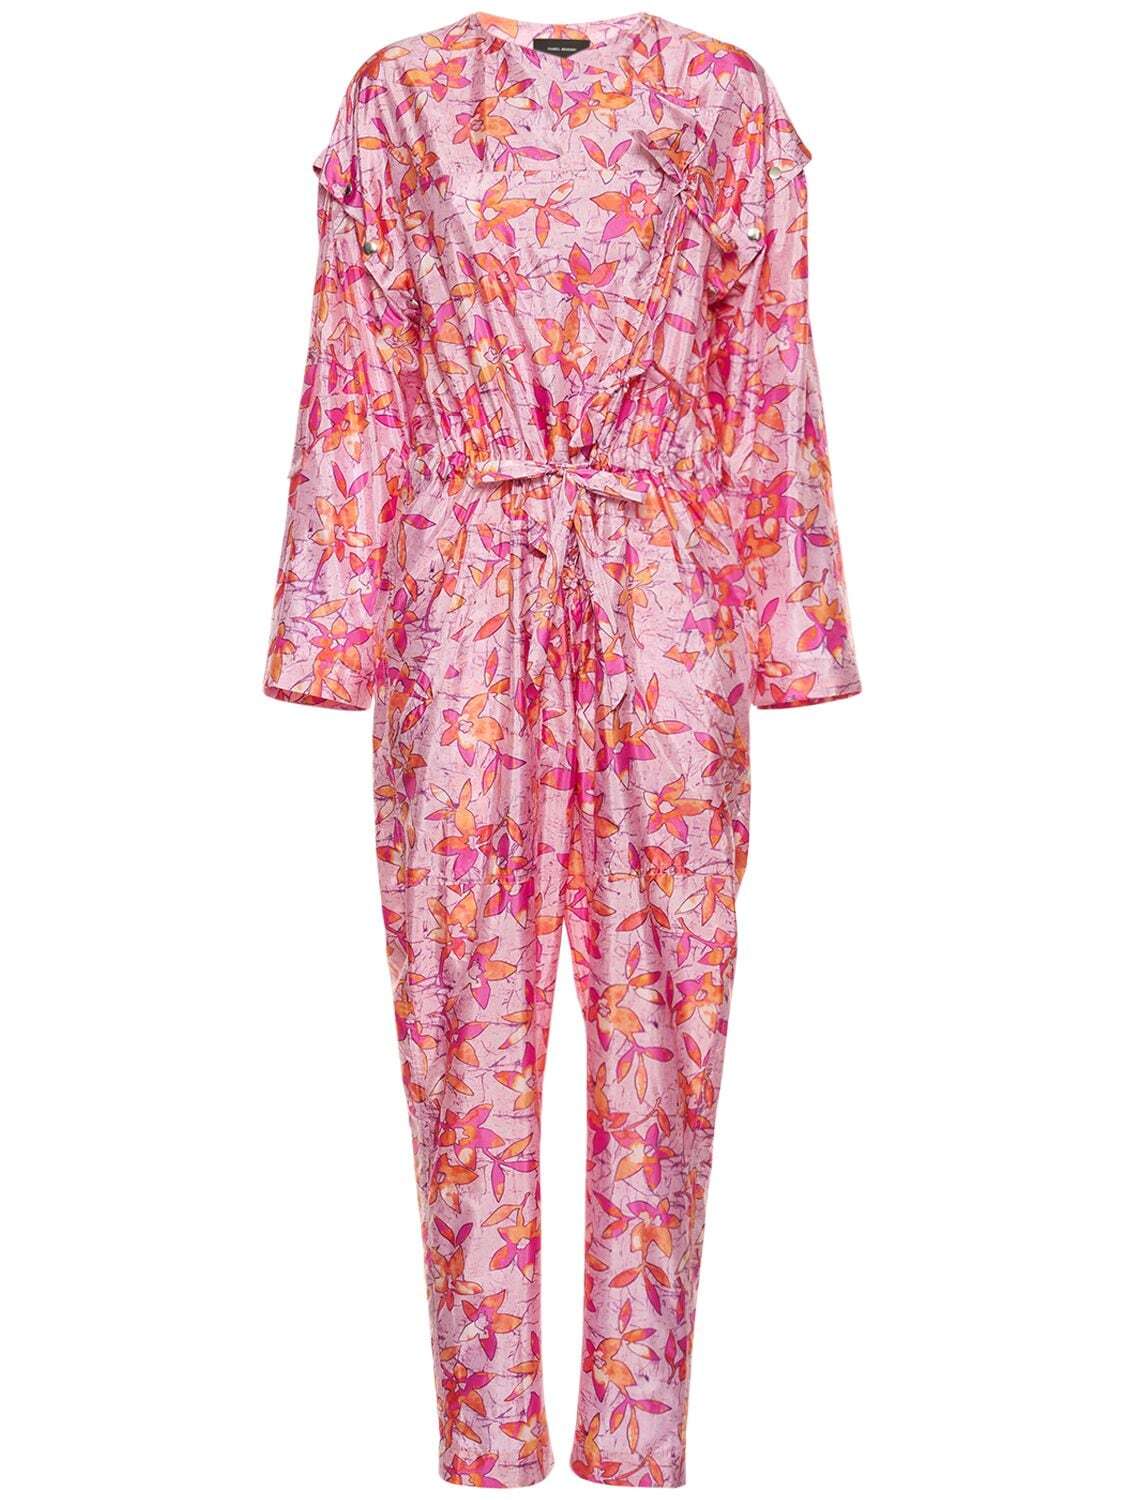 ISABEL MARANT Lympia Printed Silk Blend Jumpsuit in pink / multi